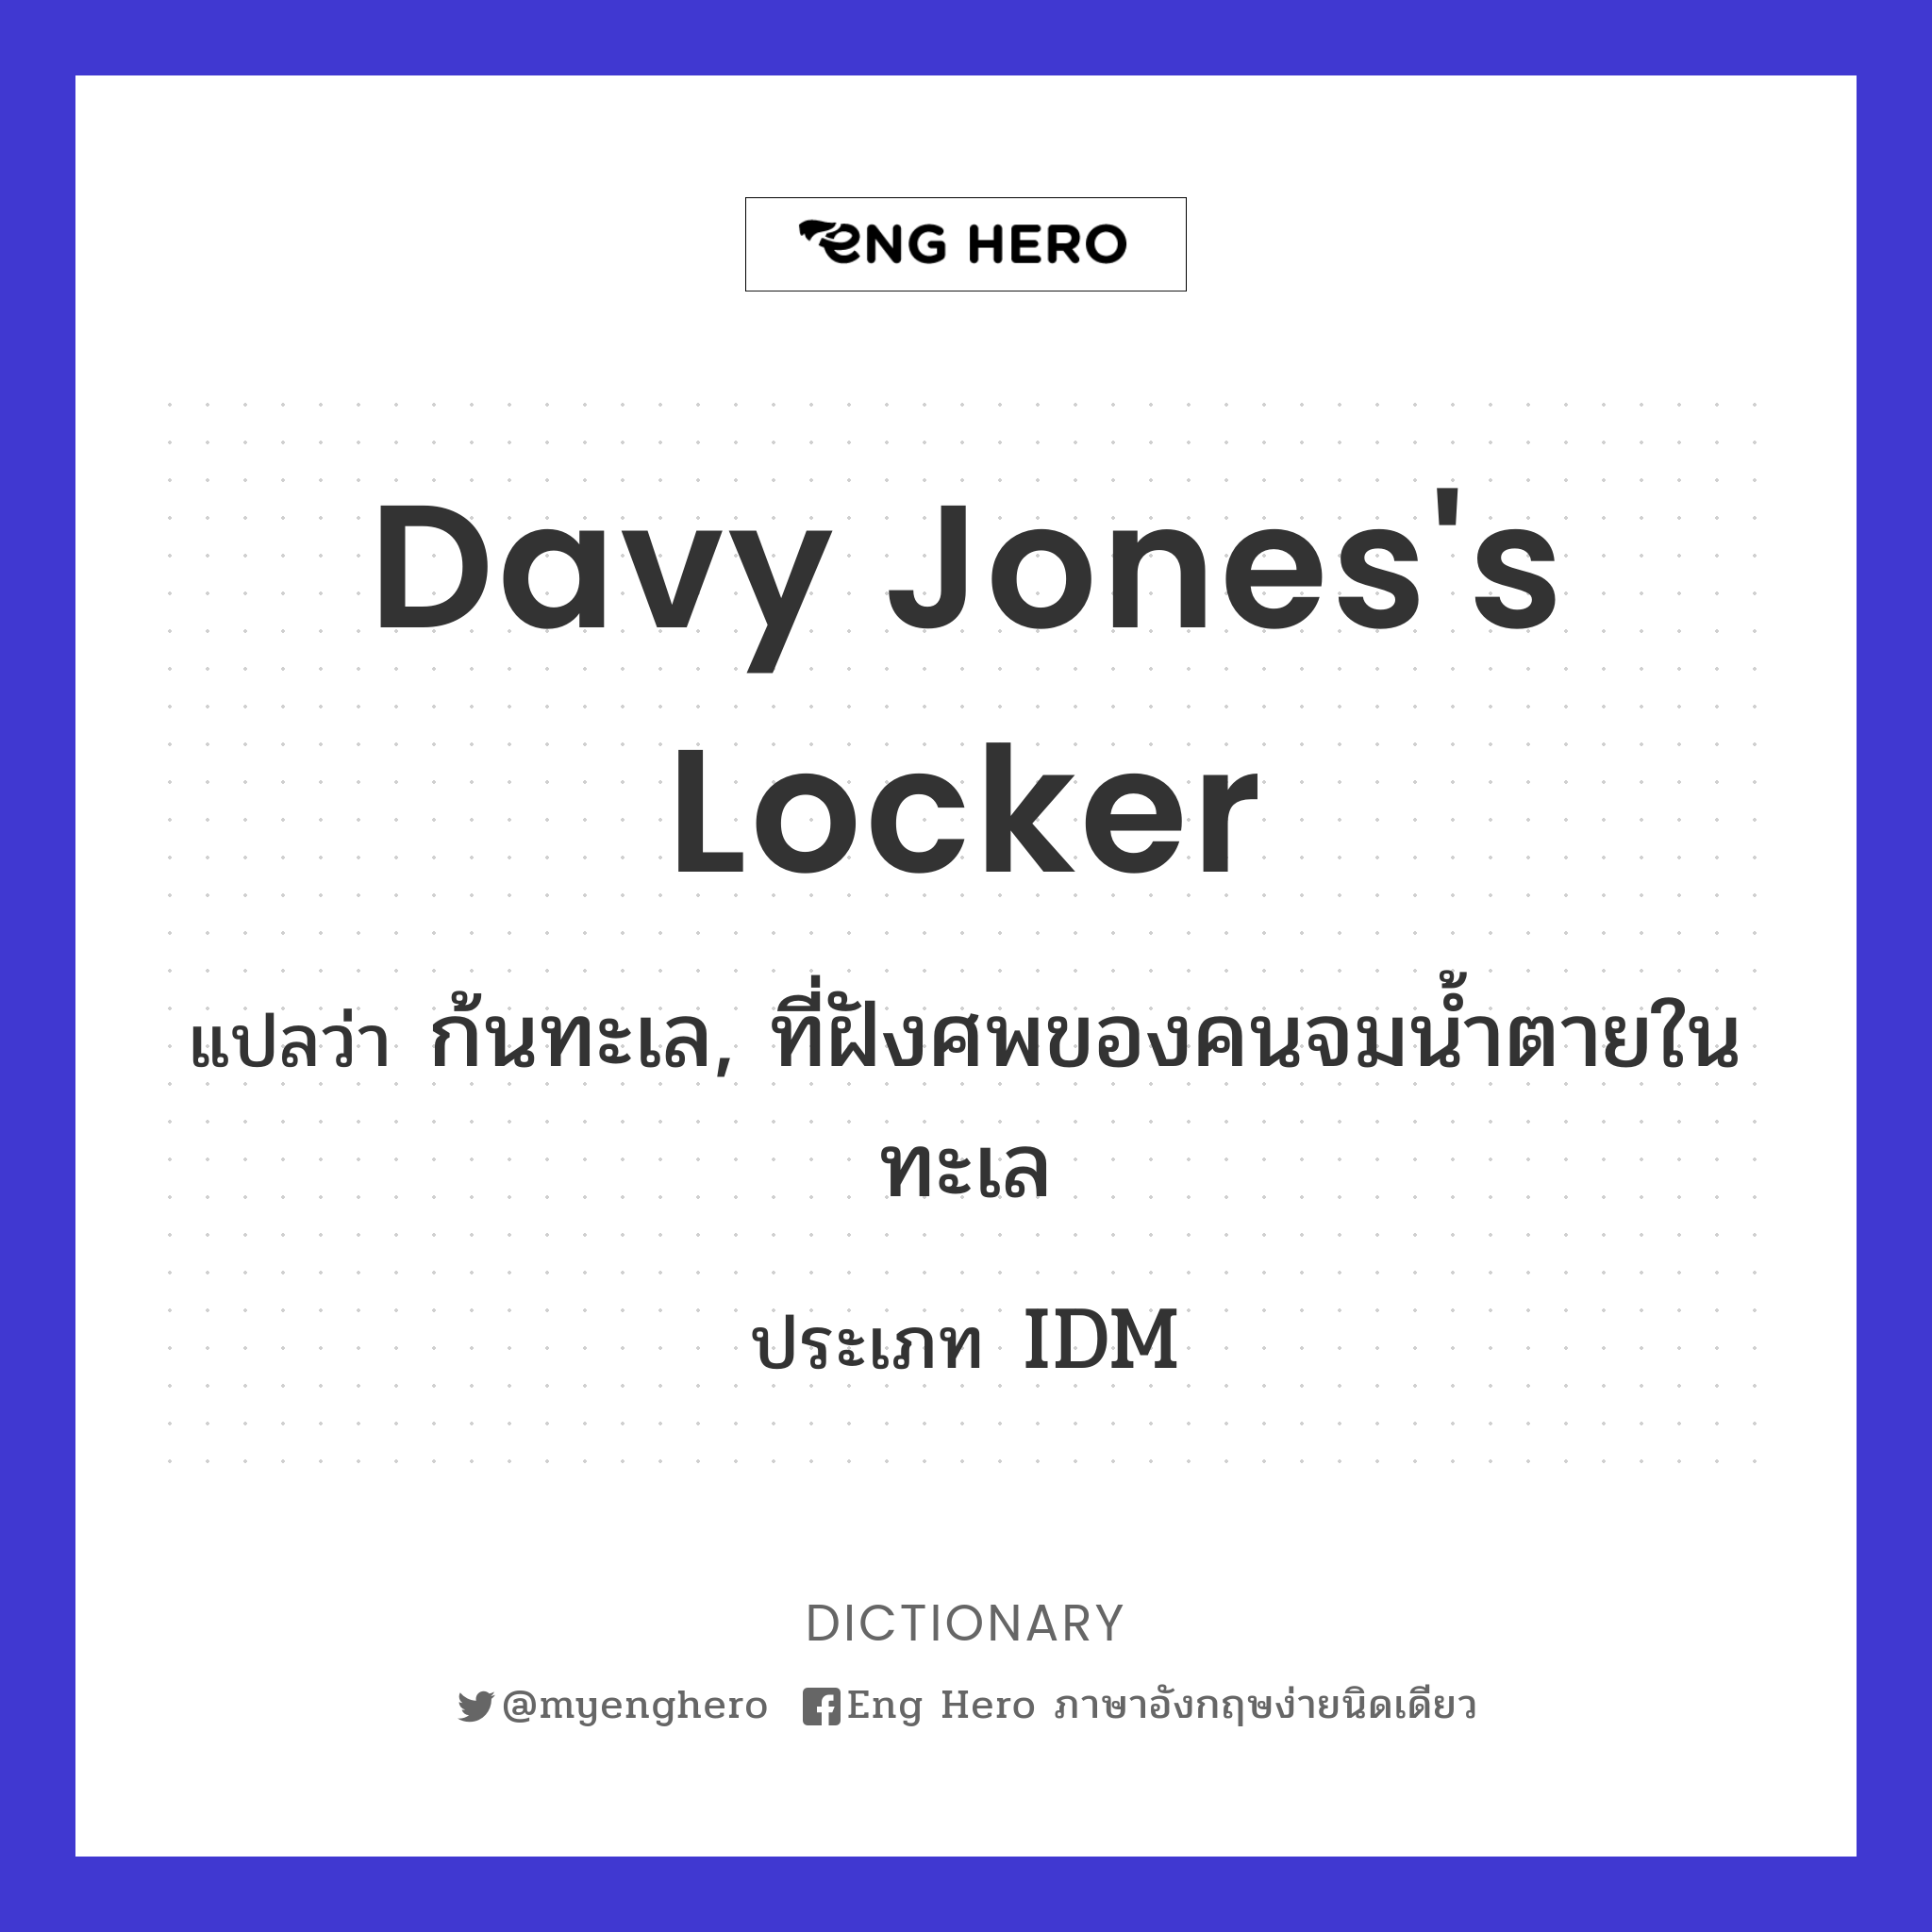 Davy Jones's locker